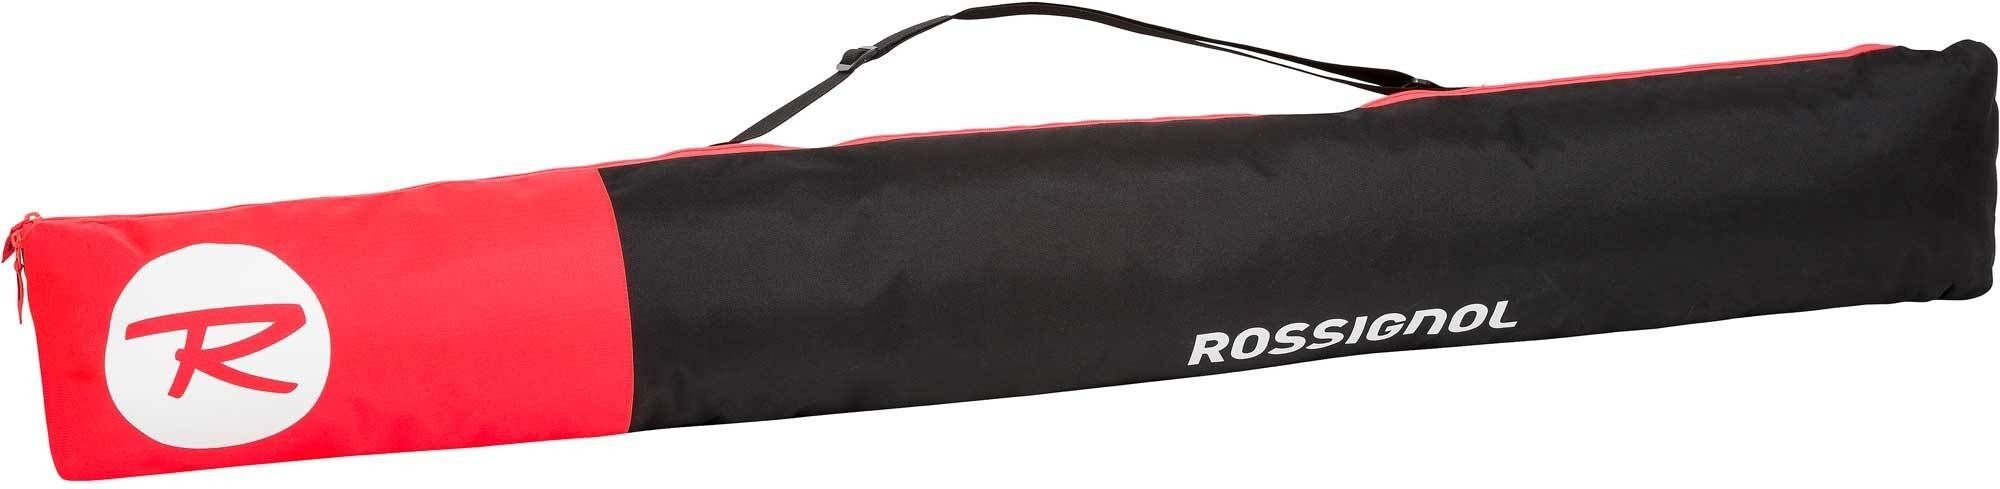 Rossignol Tactic Ski Bag extendable - Skidväska